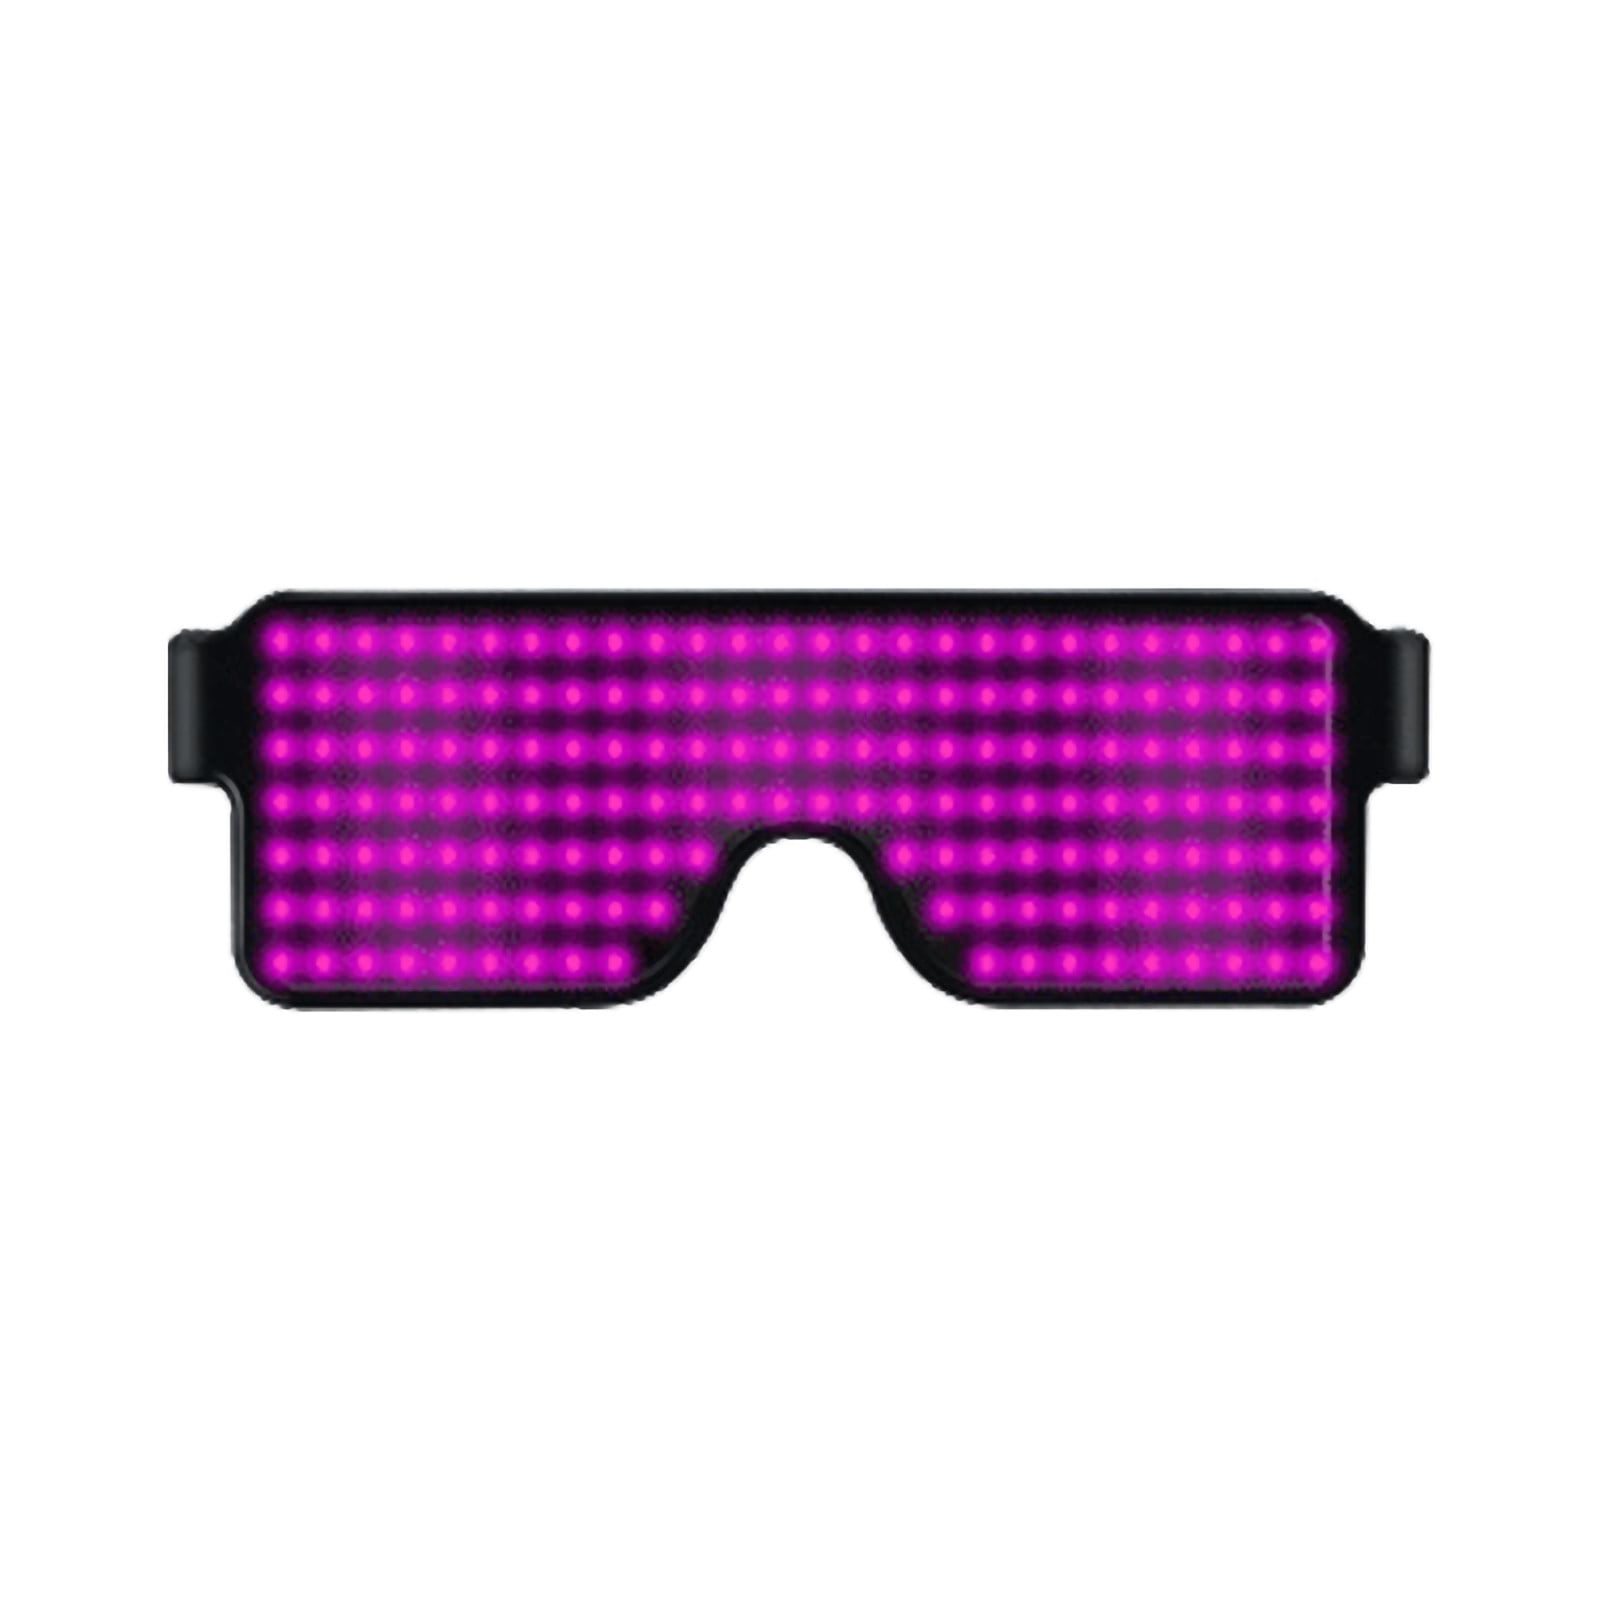 FakMe Unisex Flashing LED Glasses for Nightclub Party Bright Flashing Eyeglasses